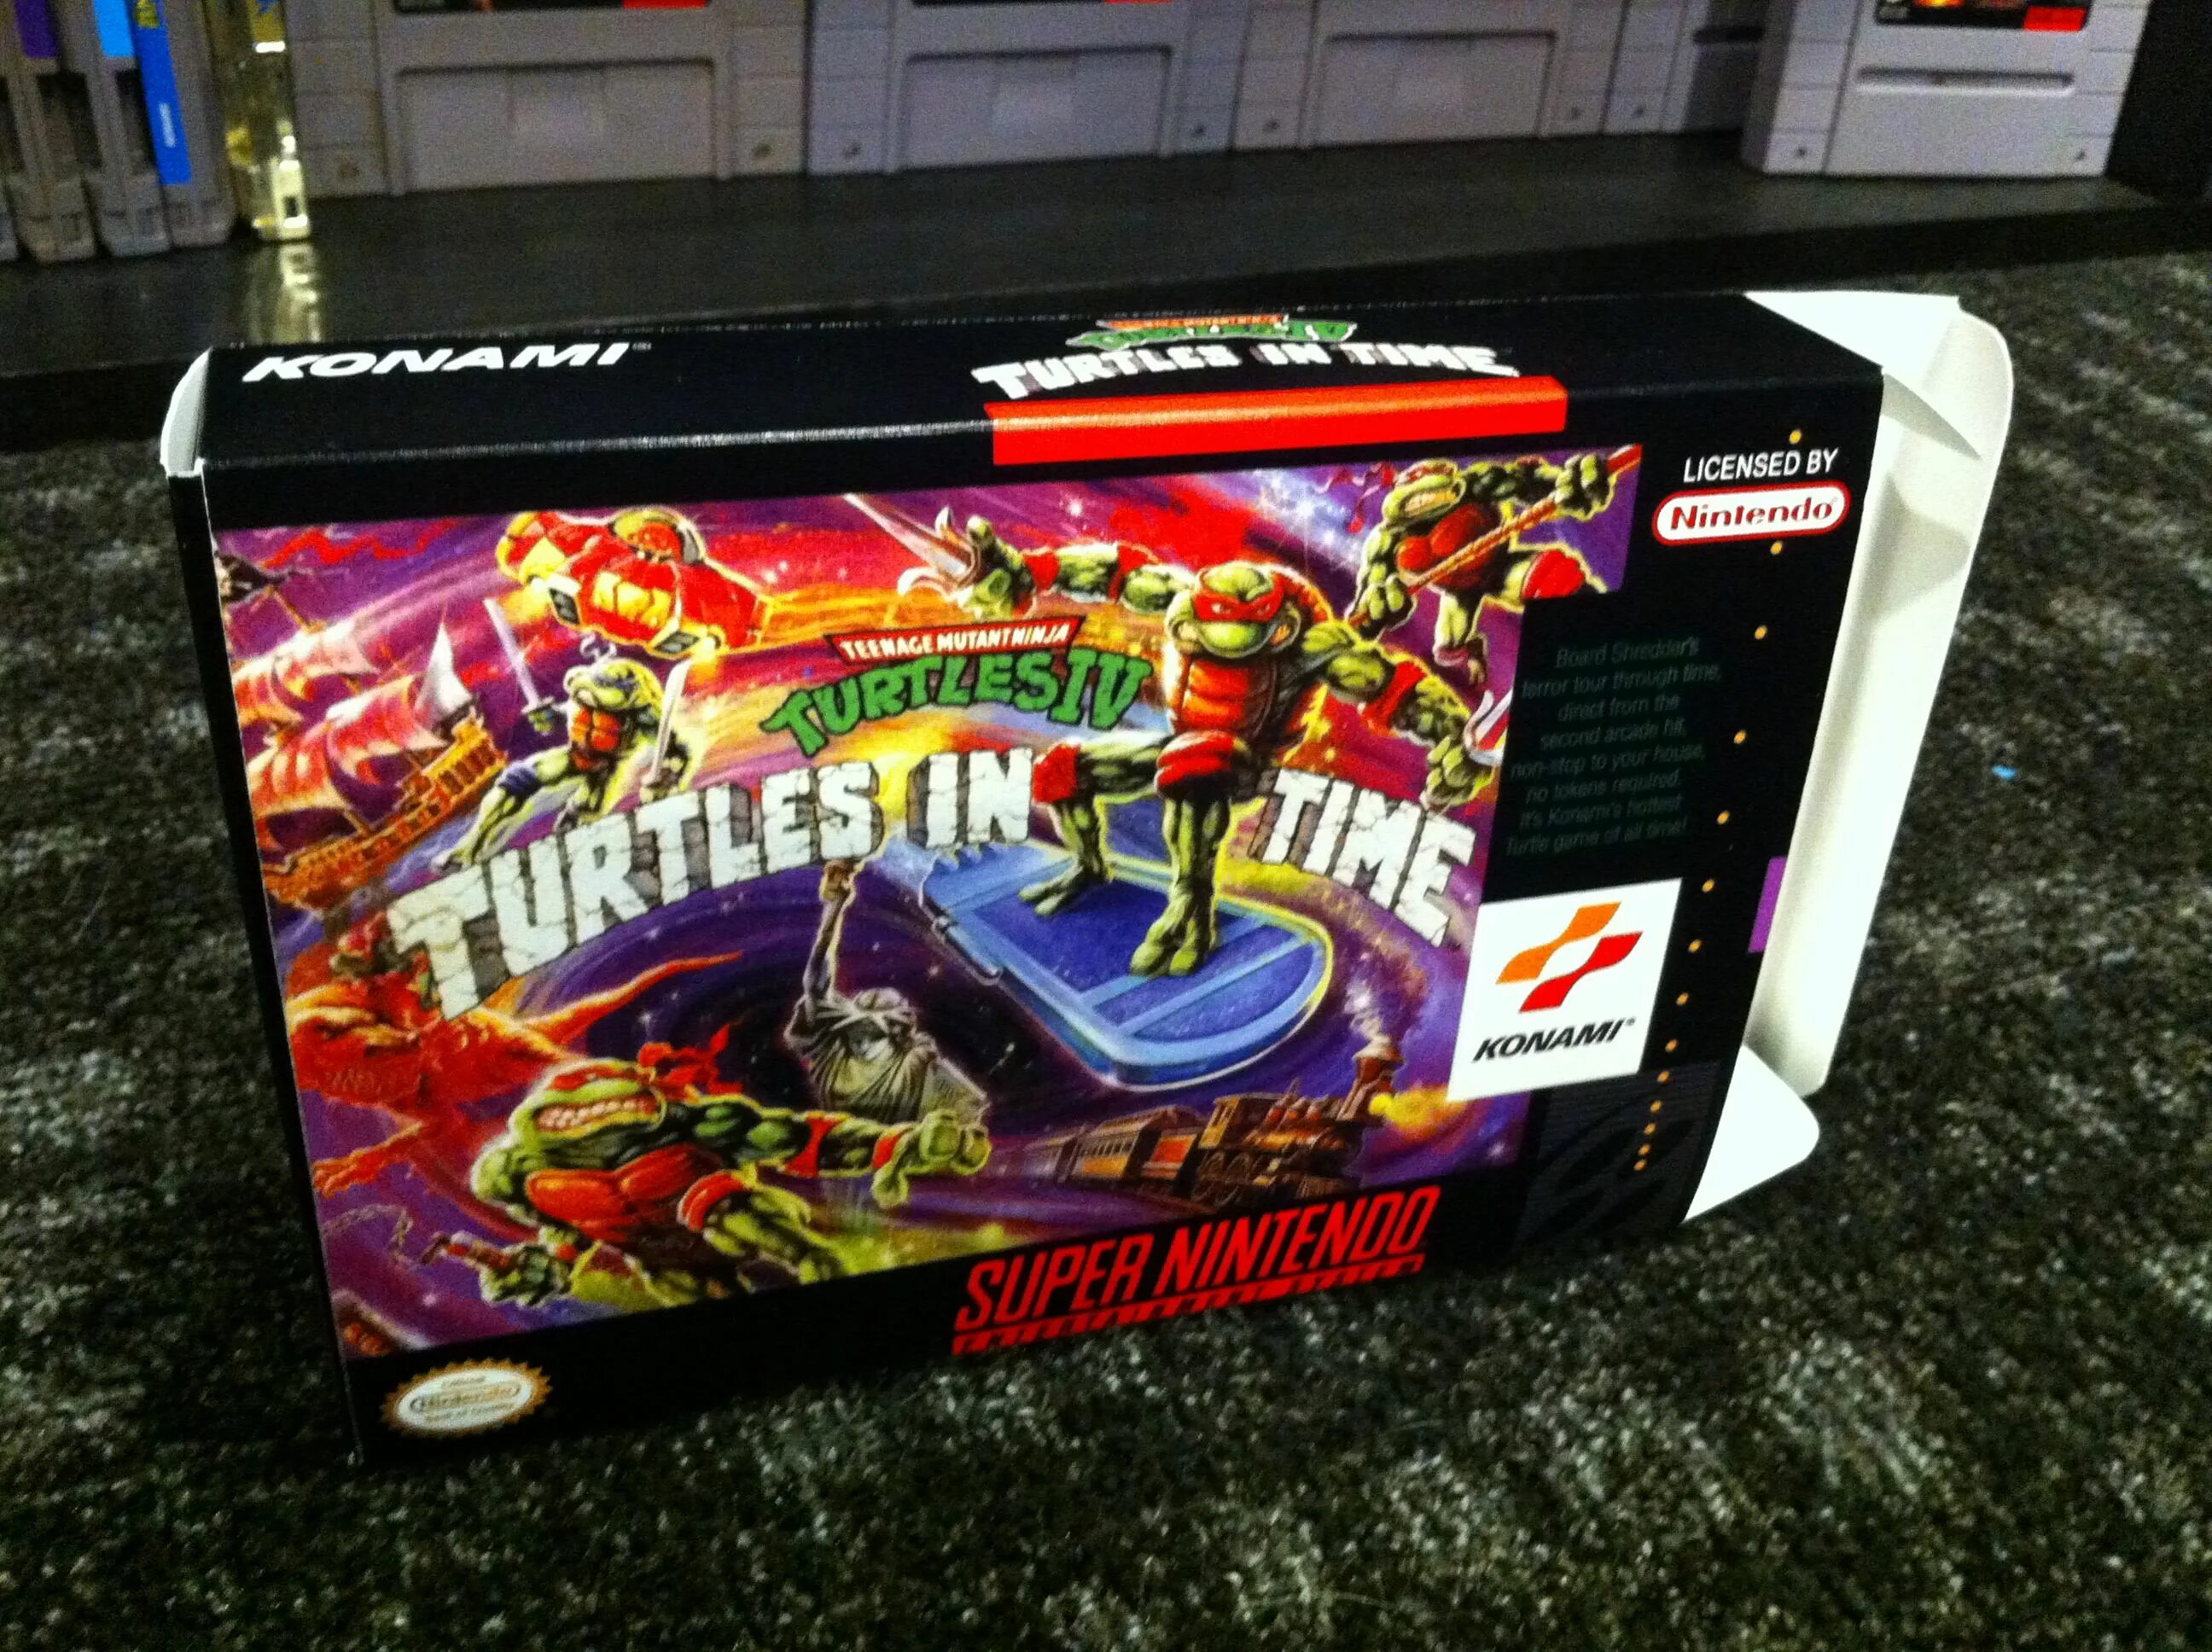 Turtles in time. Super Famicom TMNT Turtles in time. Teenage Mutant Ninja Turtles IV - Turtles in time. Super Nintendo Turtles in time картридж. Snes teenage Mutant Ninja Turtles 4.